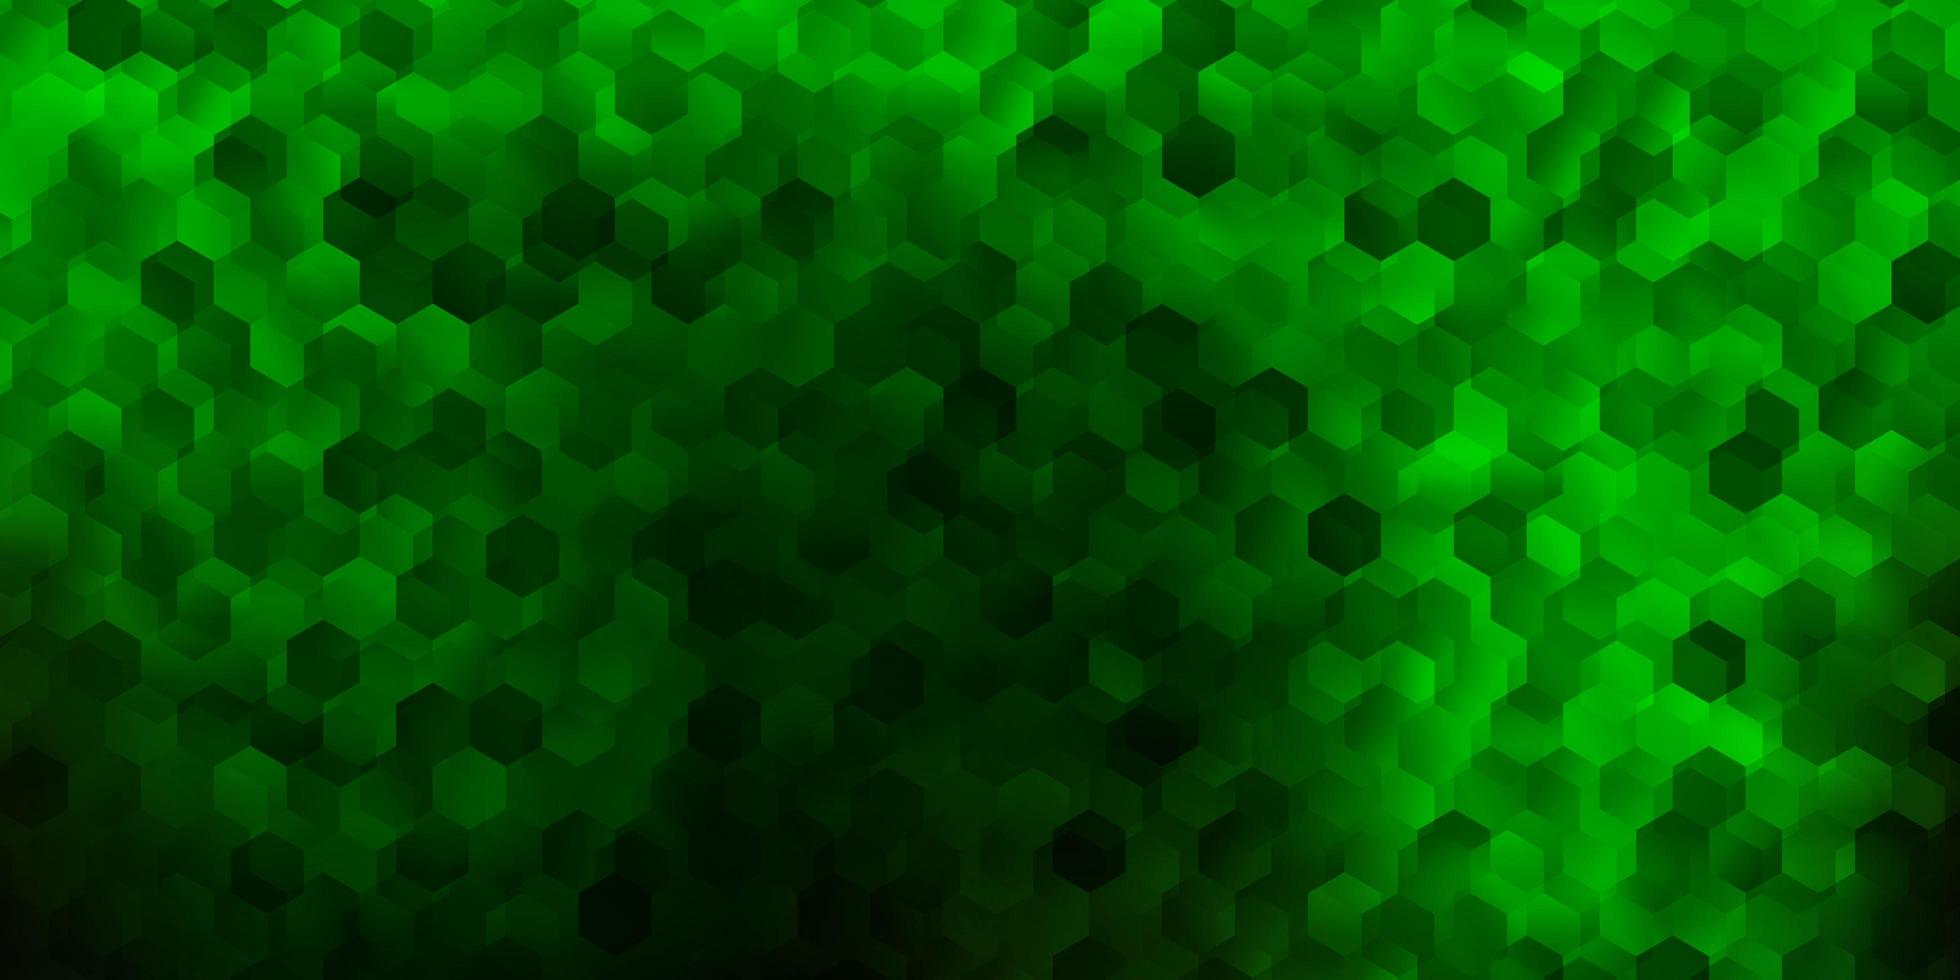 Telón de fondo de vector verde oscuro con un lote de hexágonos.